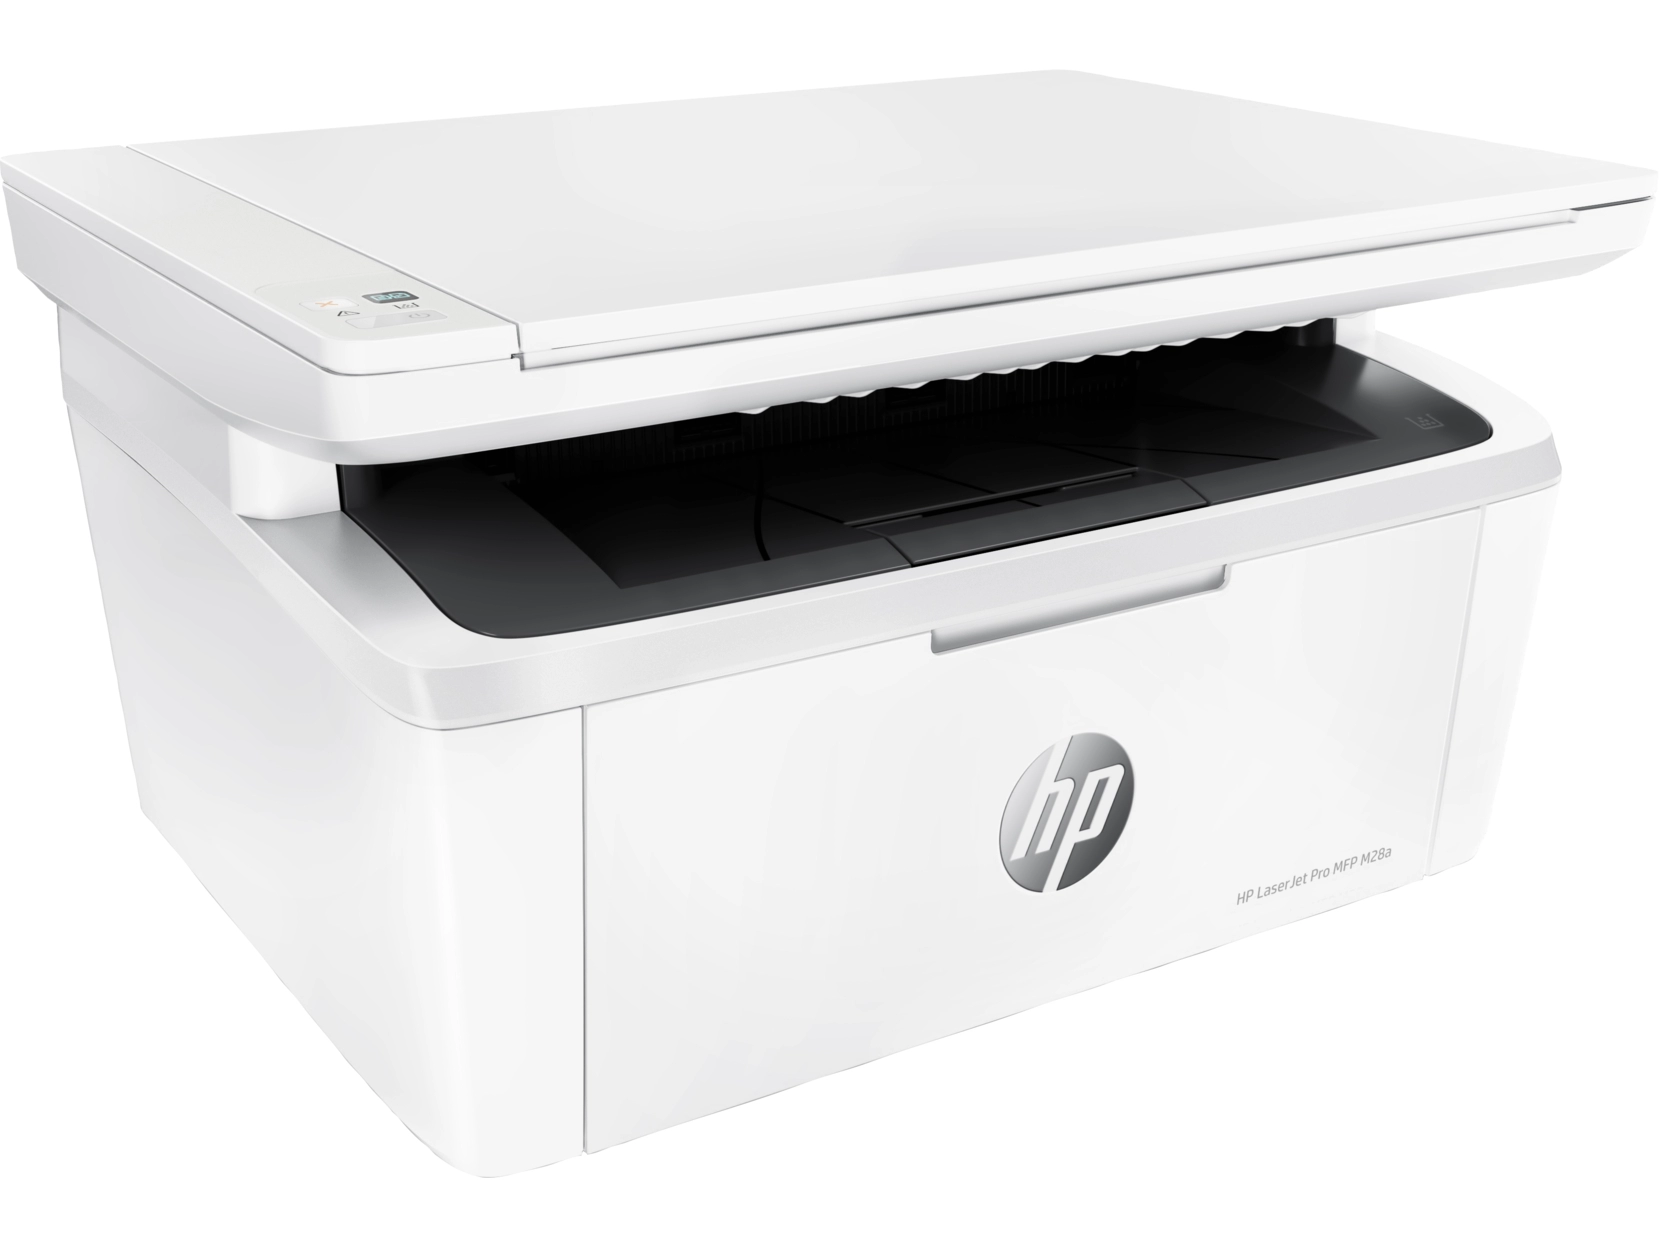 Принтер лазерный HP Pro MFP M28a